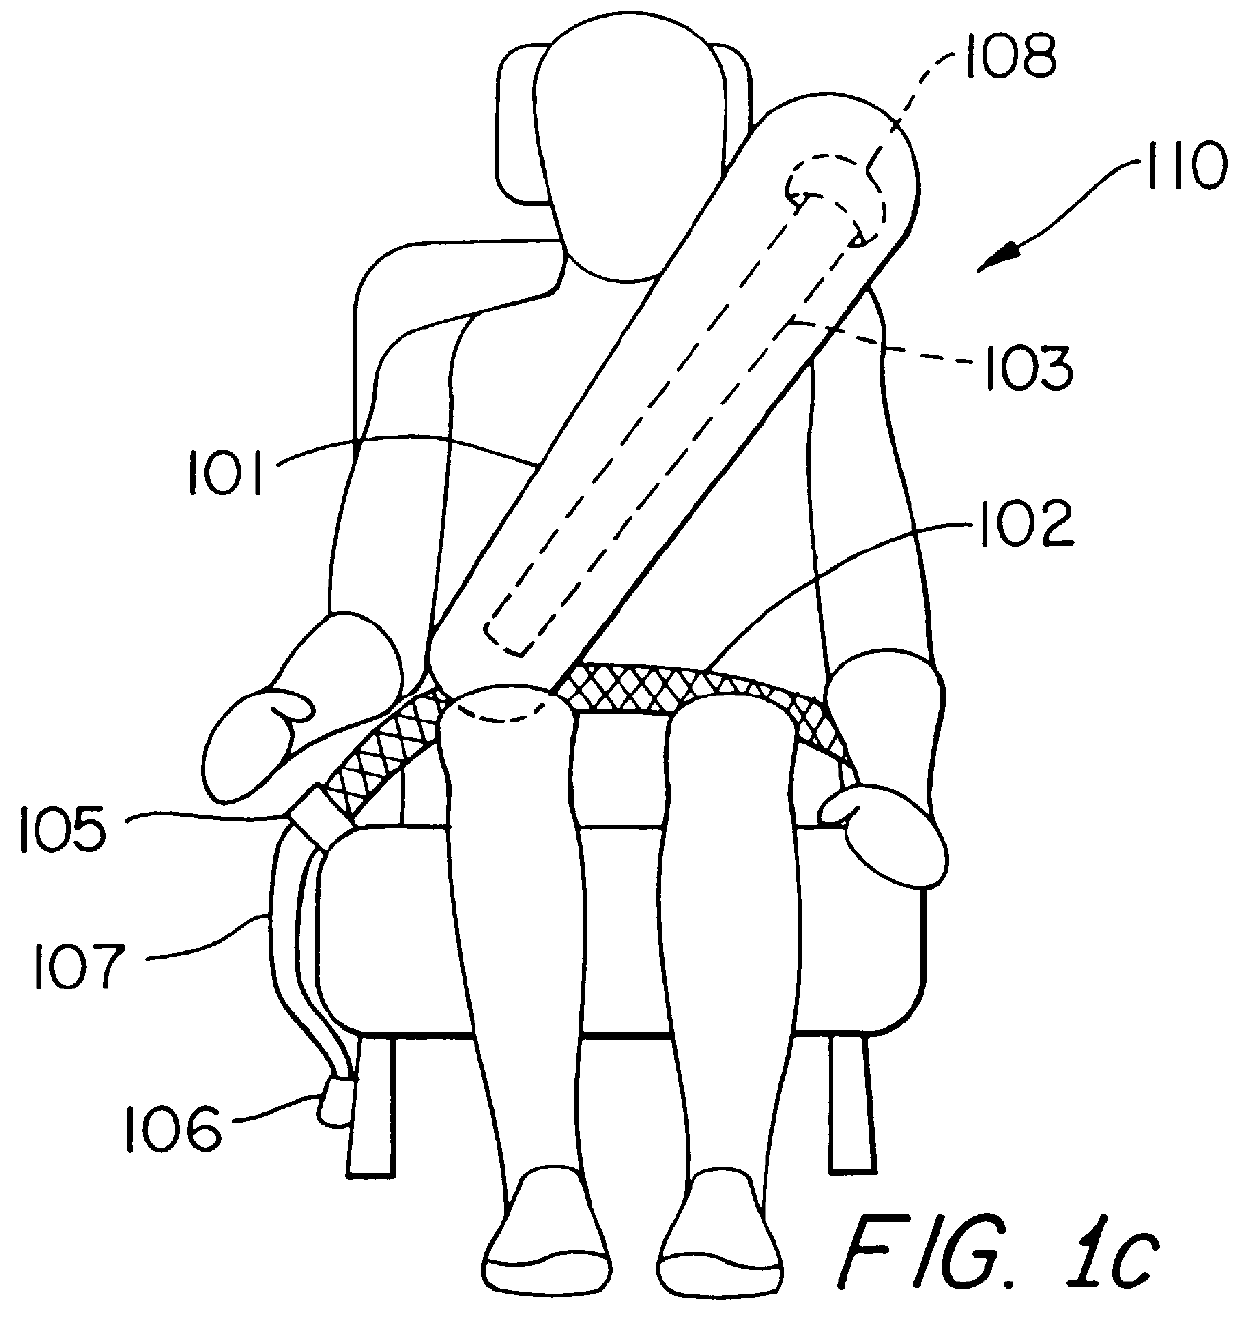 Inflatable tubular torso restraint system